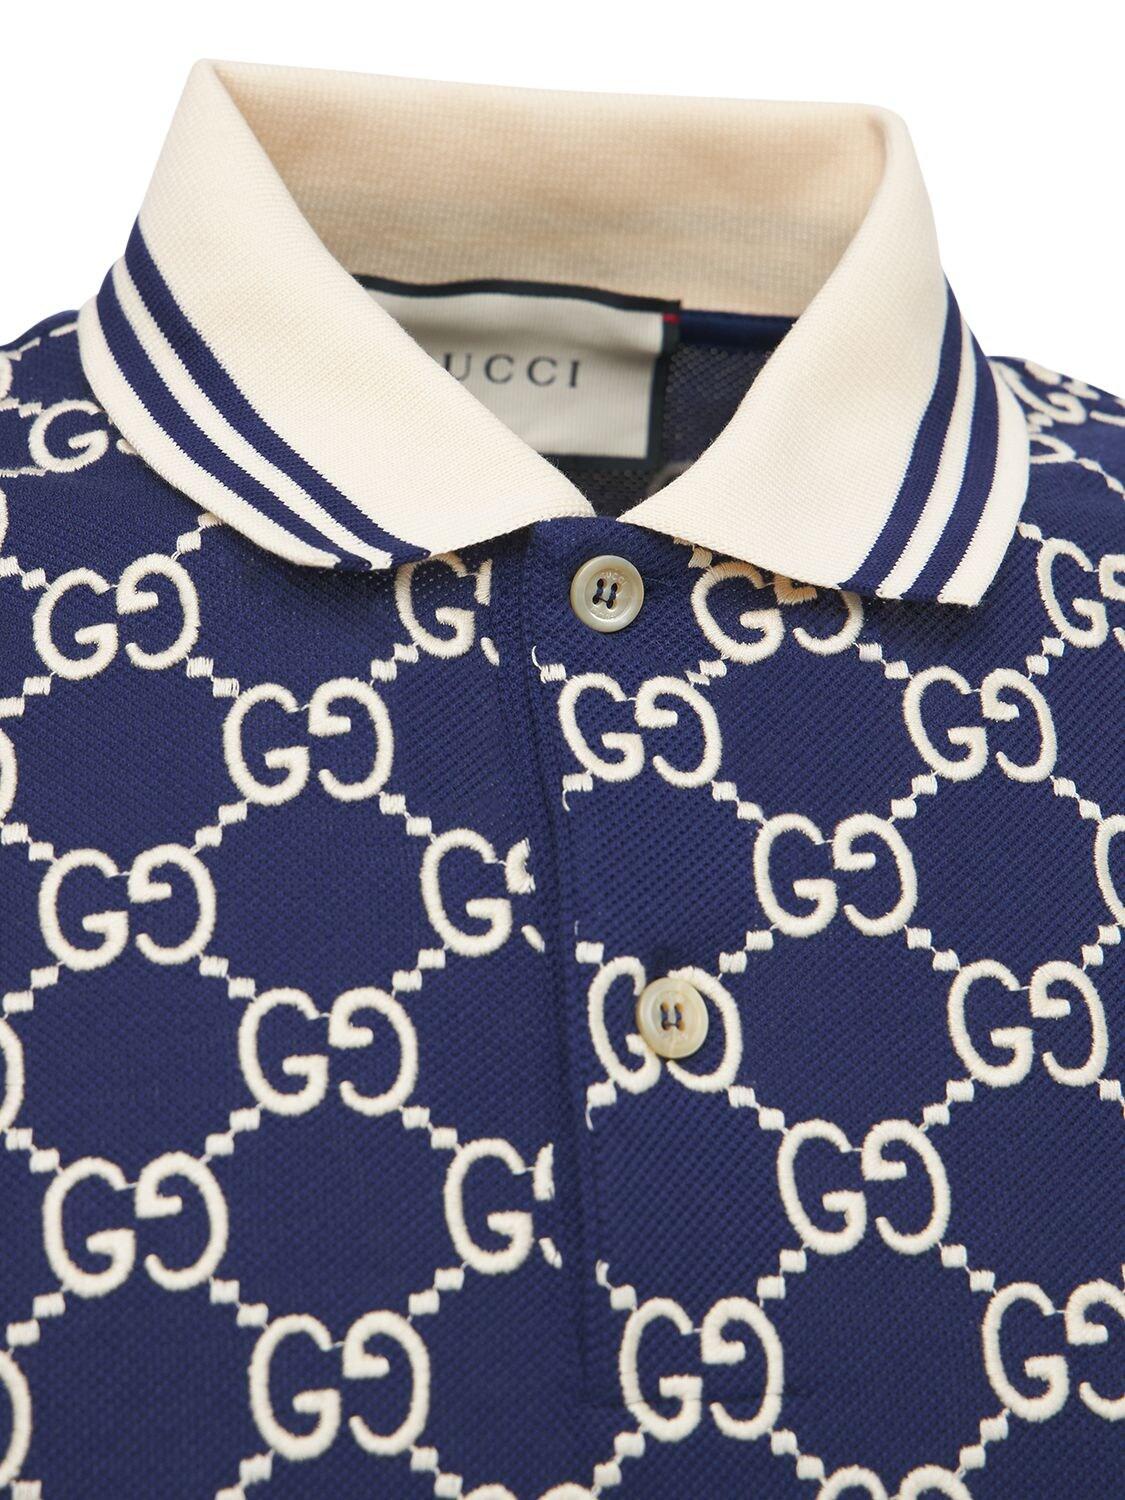 Gucci Gg Jacquard Stretch Cotton Polo in Blue for Men - Lyst